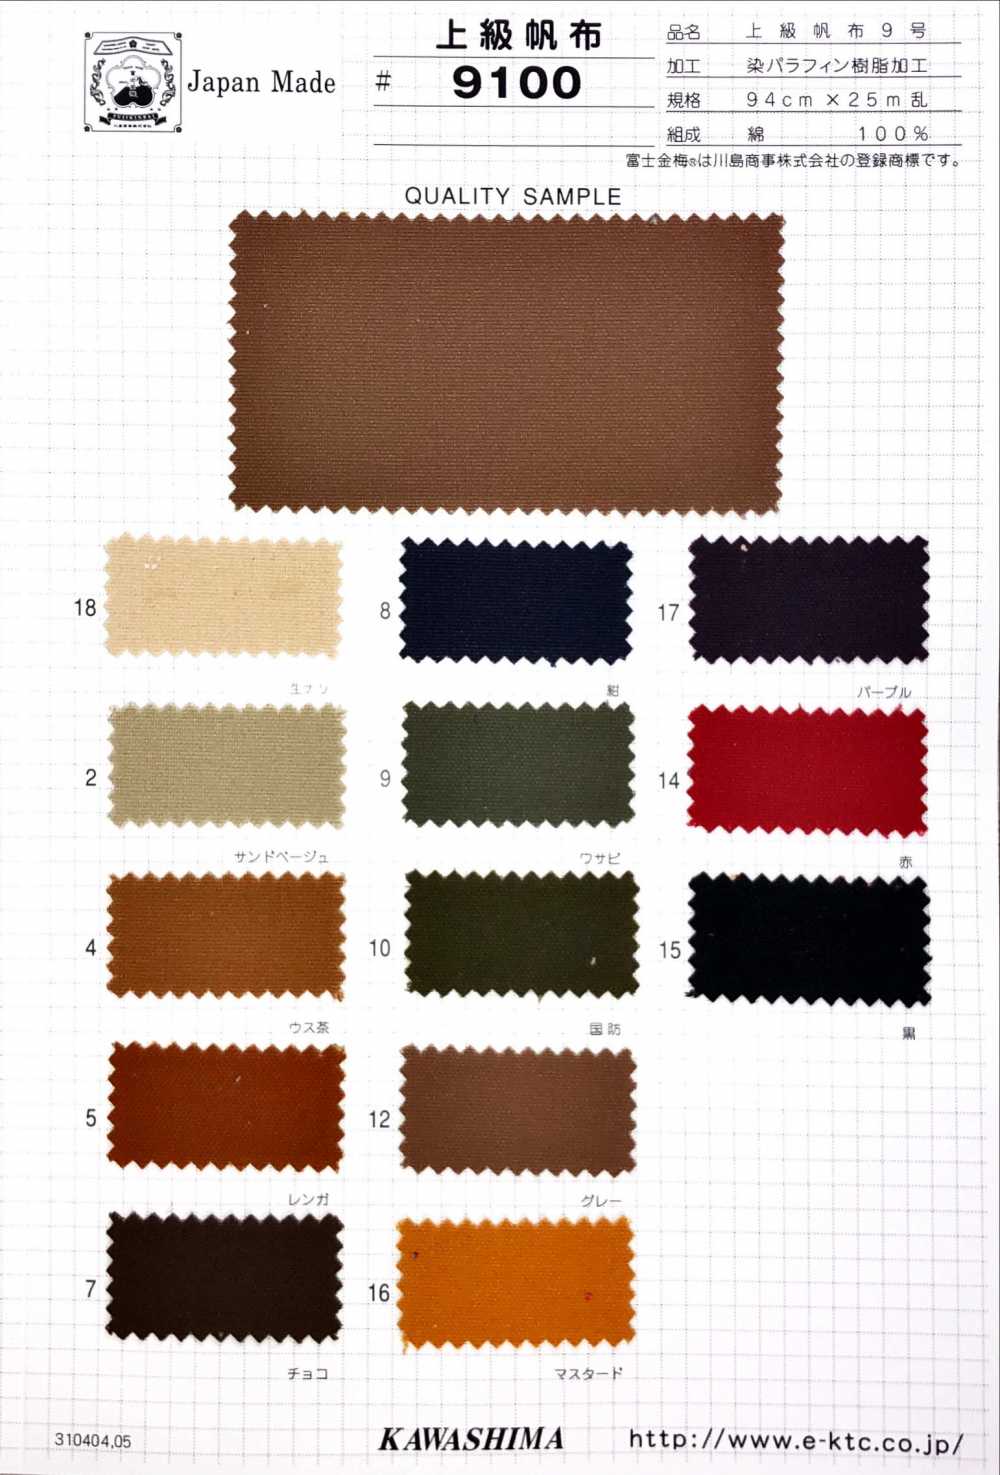 9100 Fuji Kinume Advanced Cotton Canvas No. 9 Paraffin Resin Processing[Fabrica Textil] Ciruela Dorada Fuji